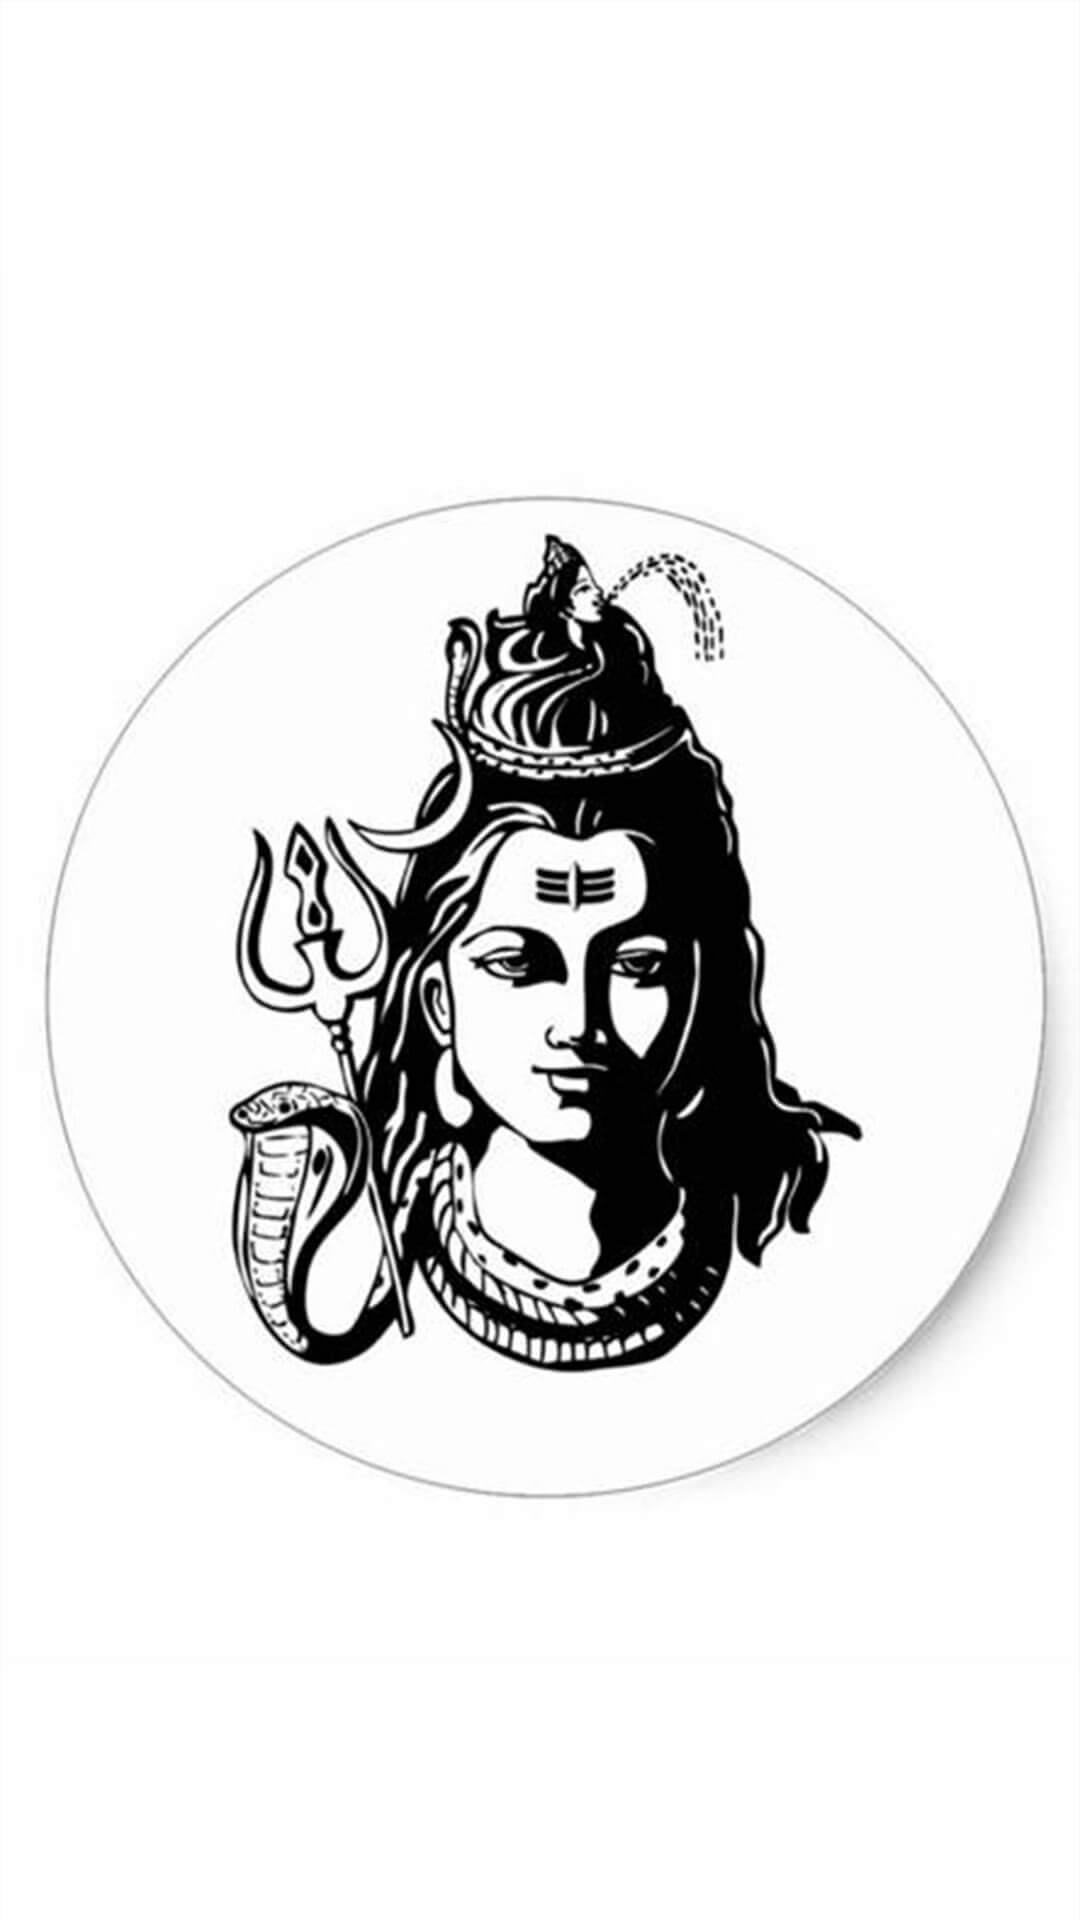 Free Lord Shiva Mobile Wallpaper Downloads, [100+] Lord Shiva Mobile  Wallpapers for FREE 